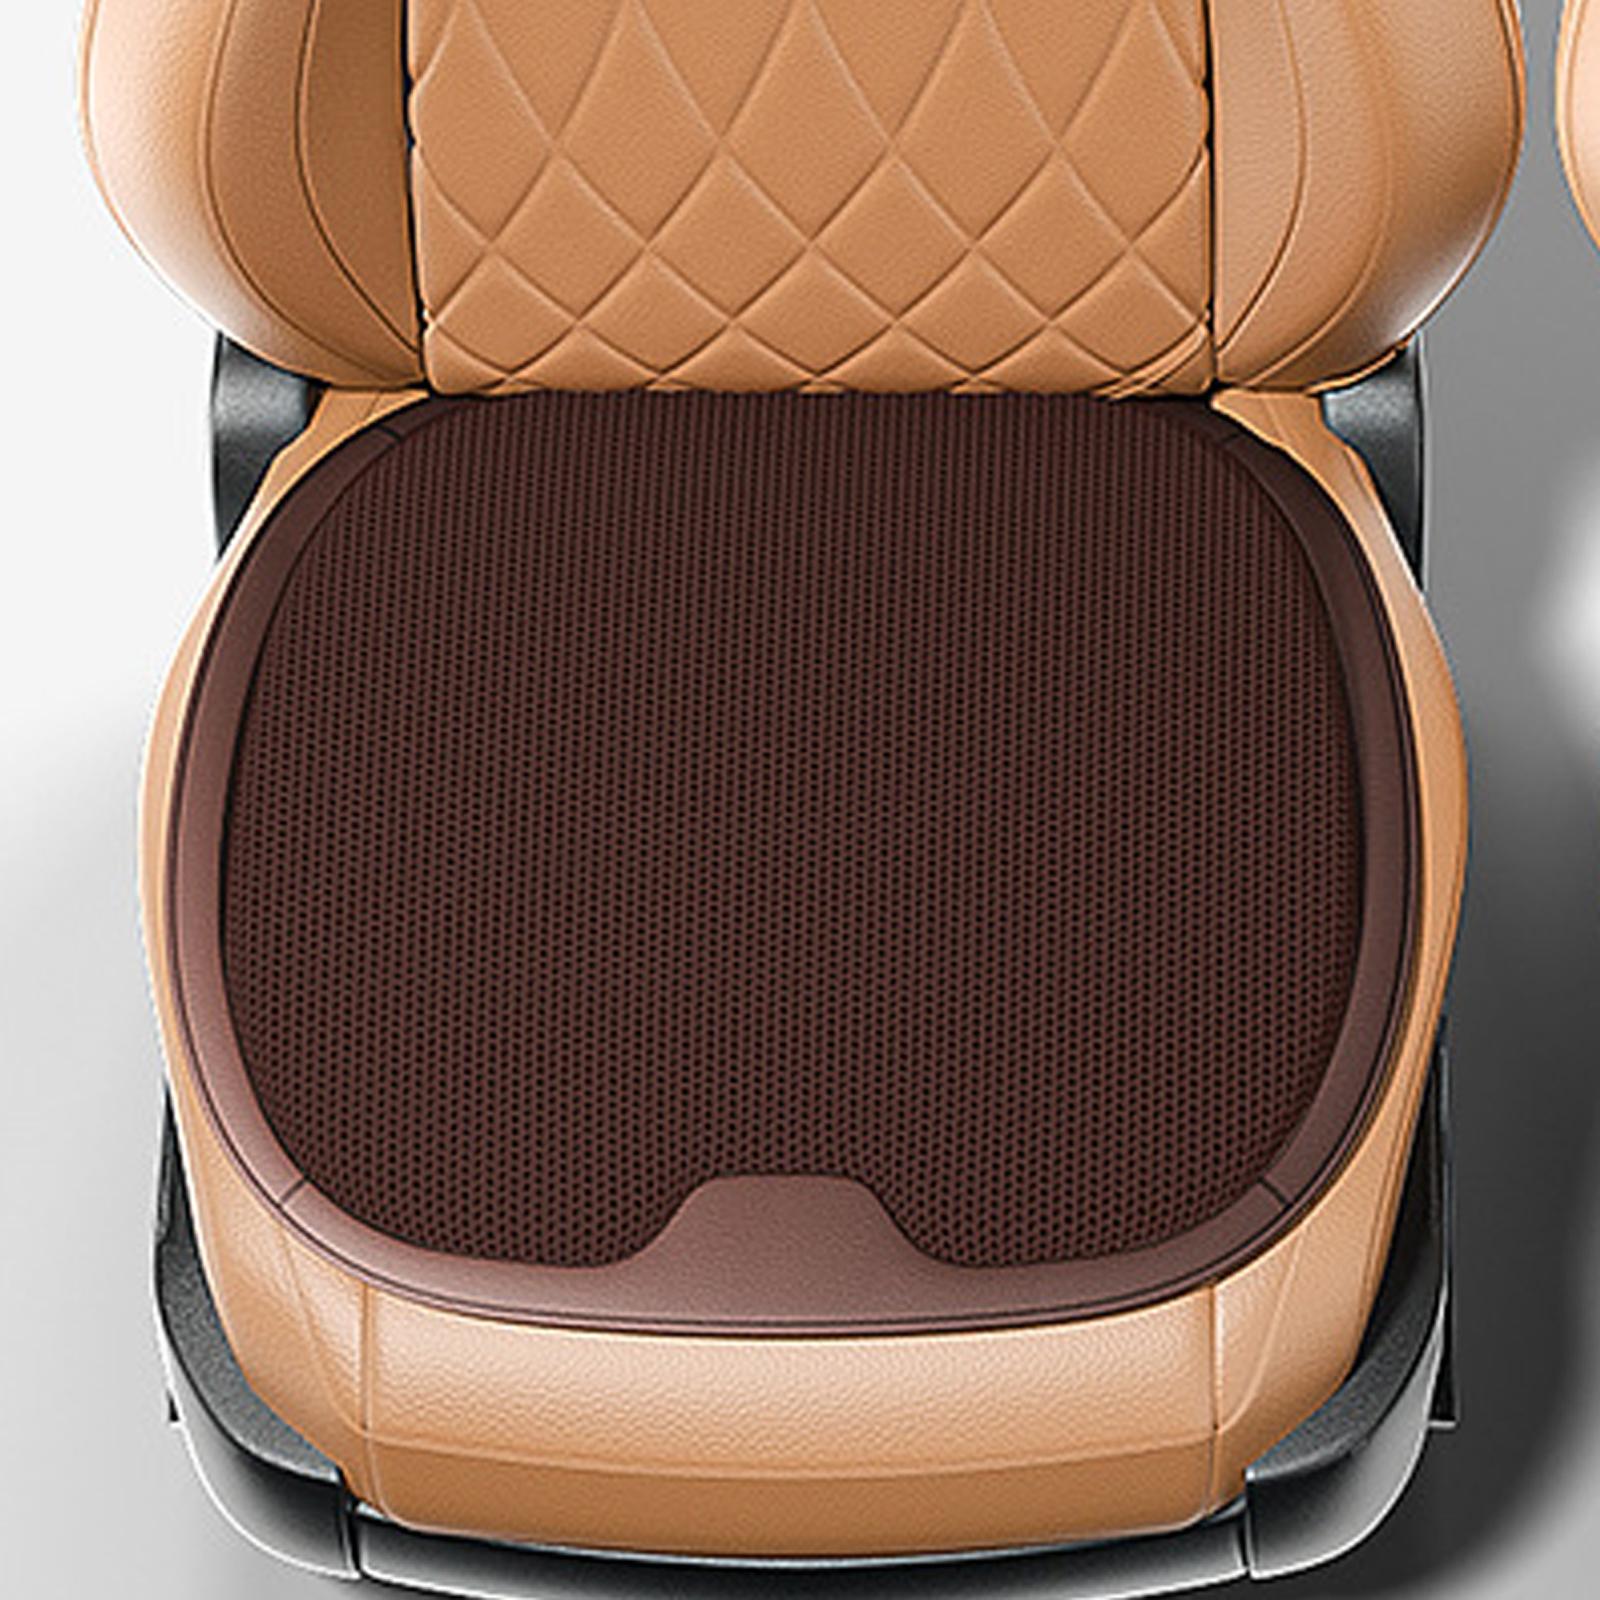 Car Interior Seat Cover Cushion Pad Mesh Sponge Seat Protector Auto Supplies Brown